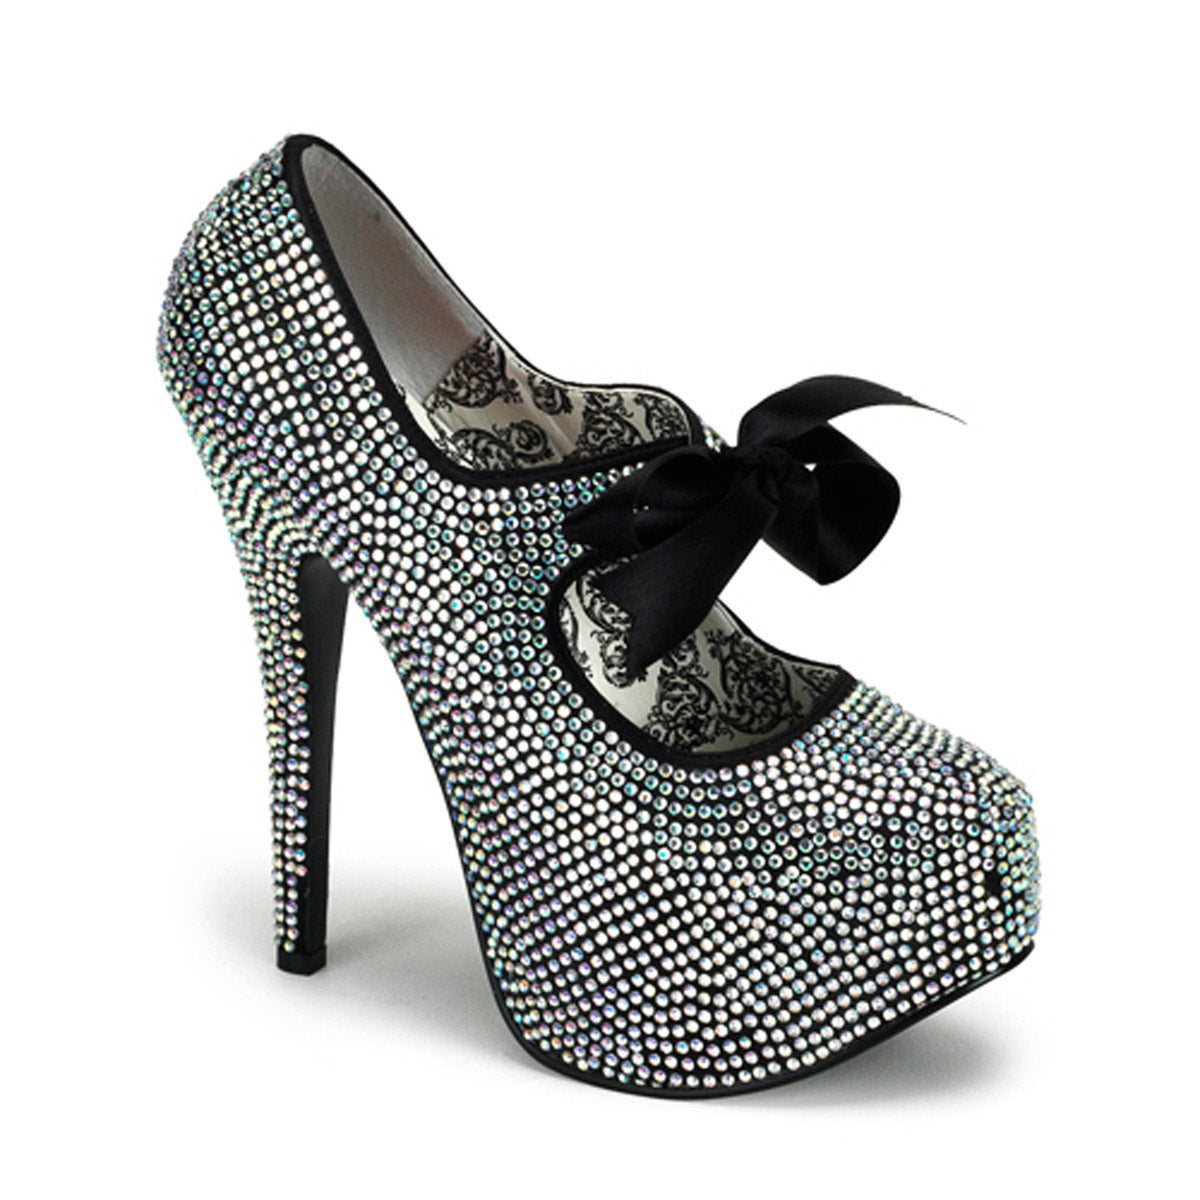 Rhinestone Hidden Platform Stiletto Mary Jane Pumps High Heels Shoes Pleaser Bordello TEEZE/04R